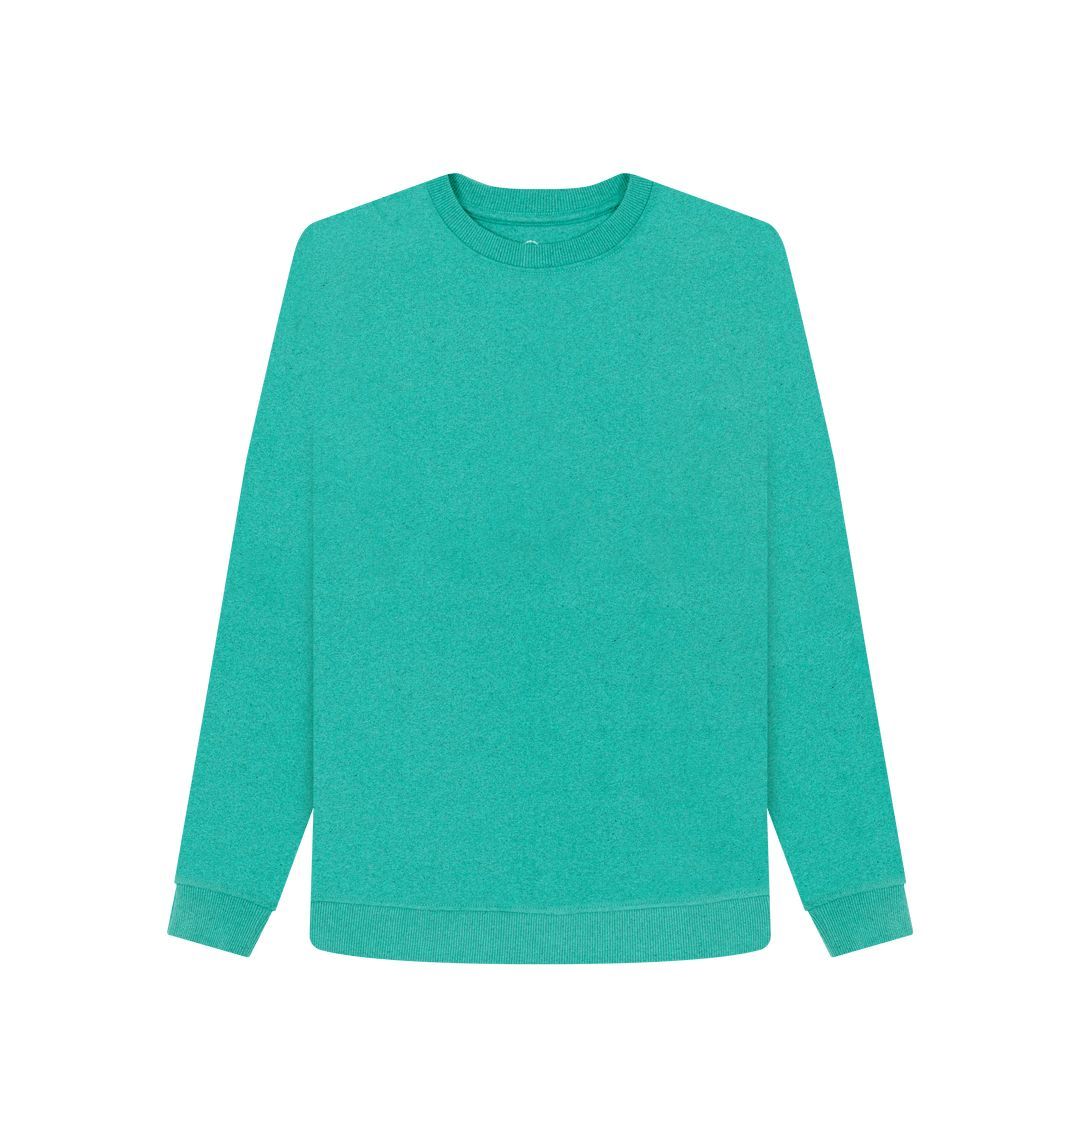 Seagrass Green Women's sustainable essential sweatshirt